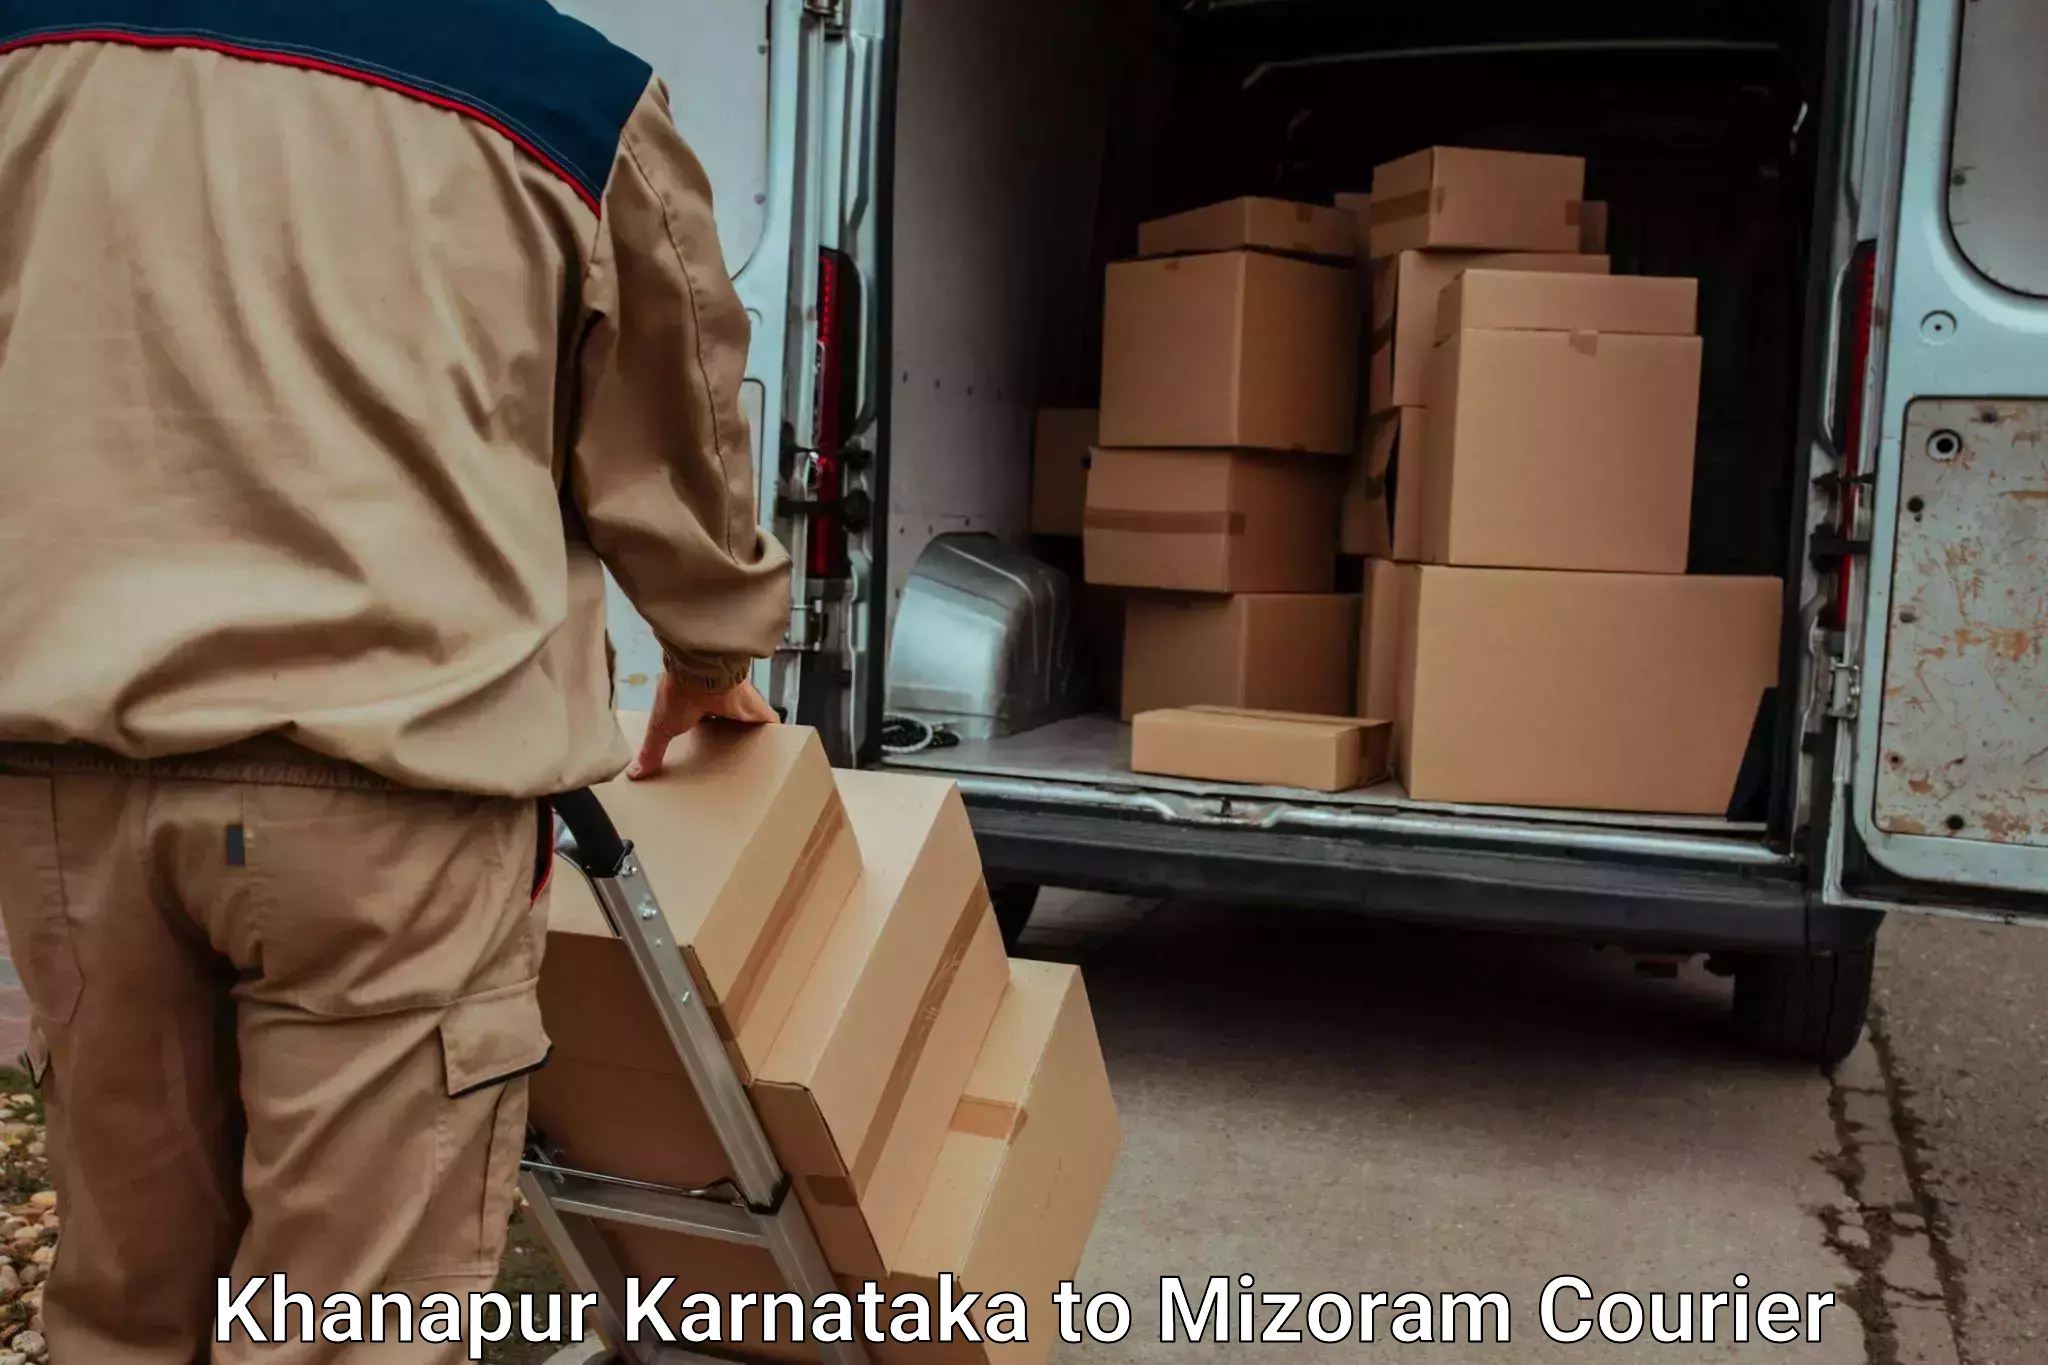 Efficient moving company Khanapur Karnataka to Mizoram